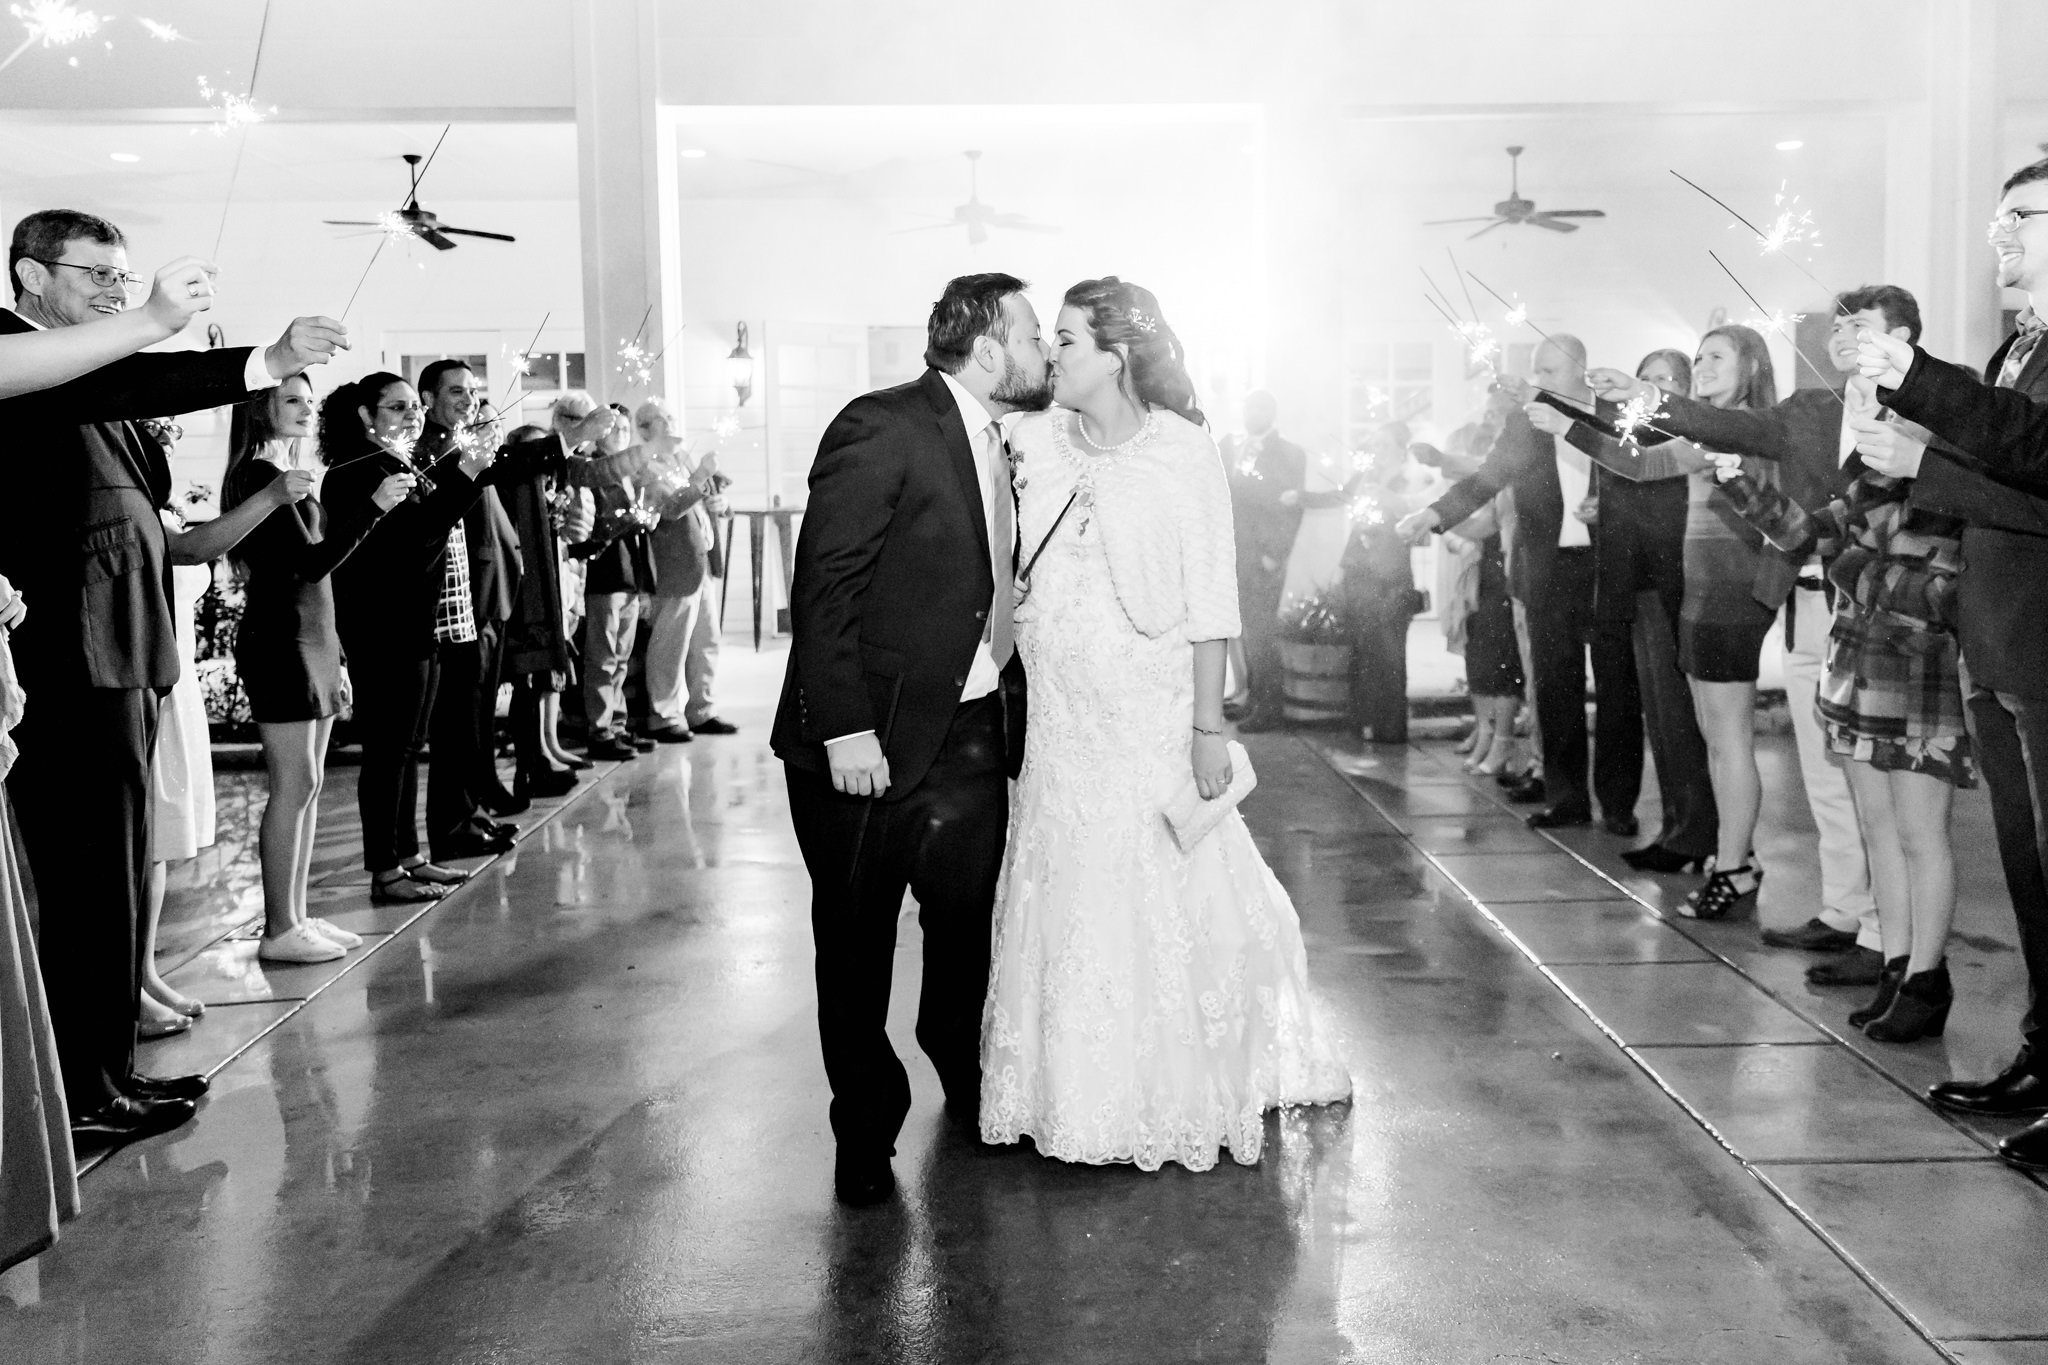 A Harry Potter Themed Wedding at Kendall Plantation by Dawn Elizabeth Studios, Boerne Wedding Photographer